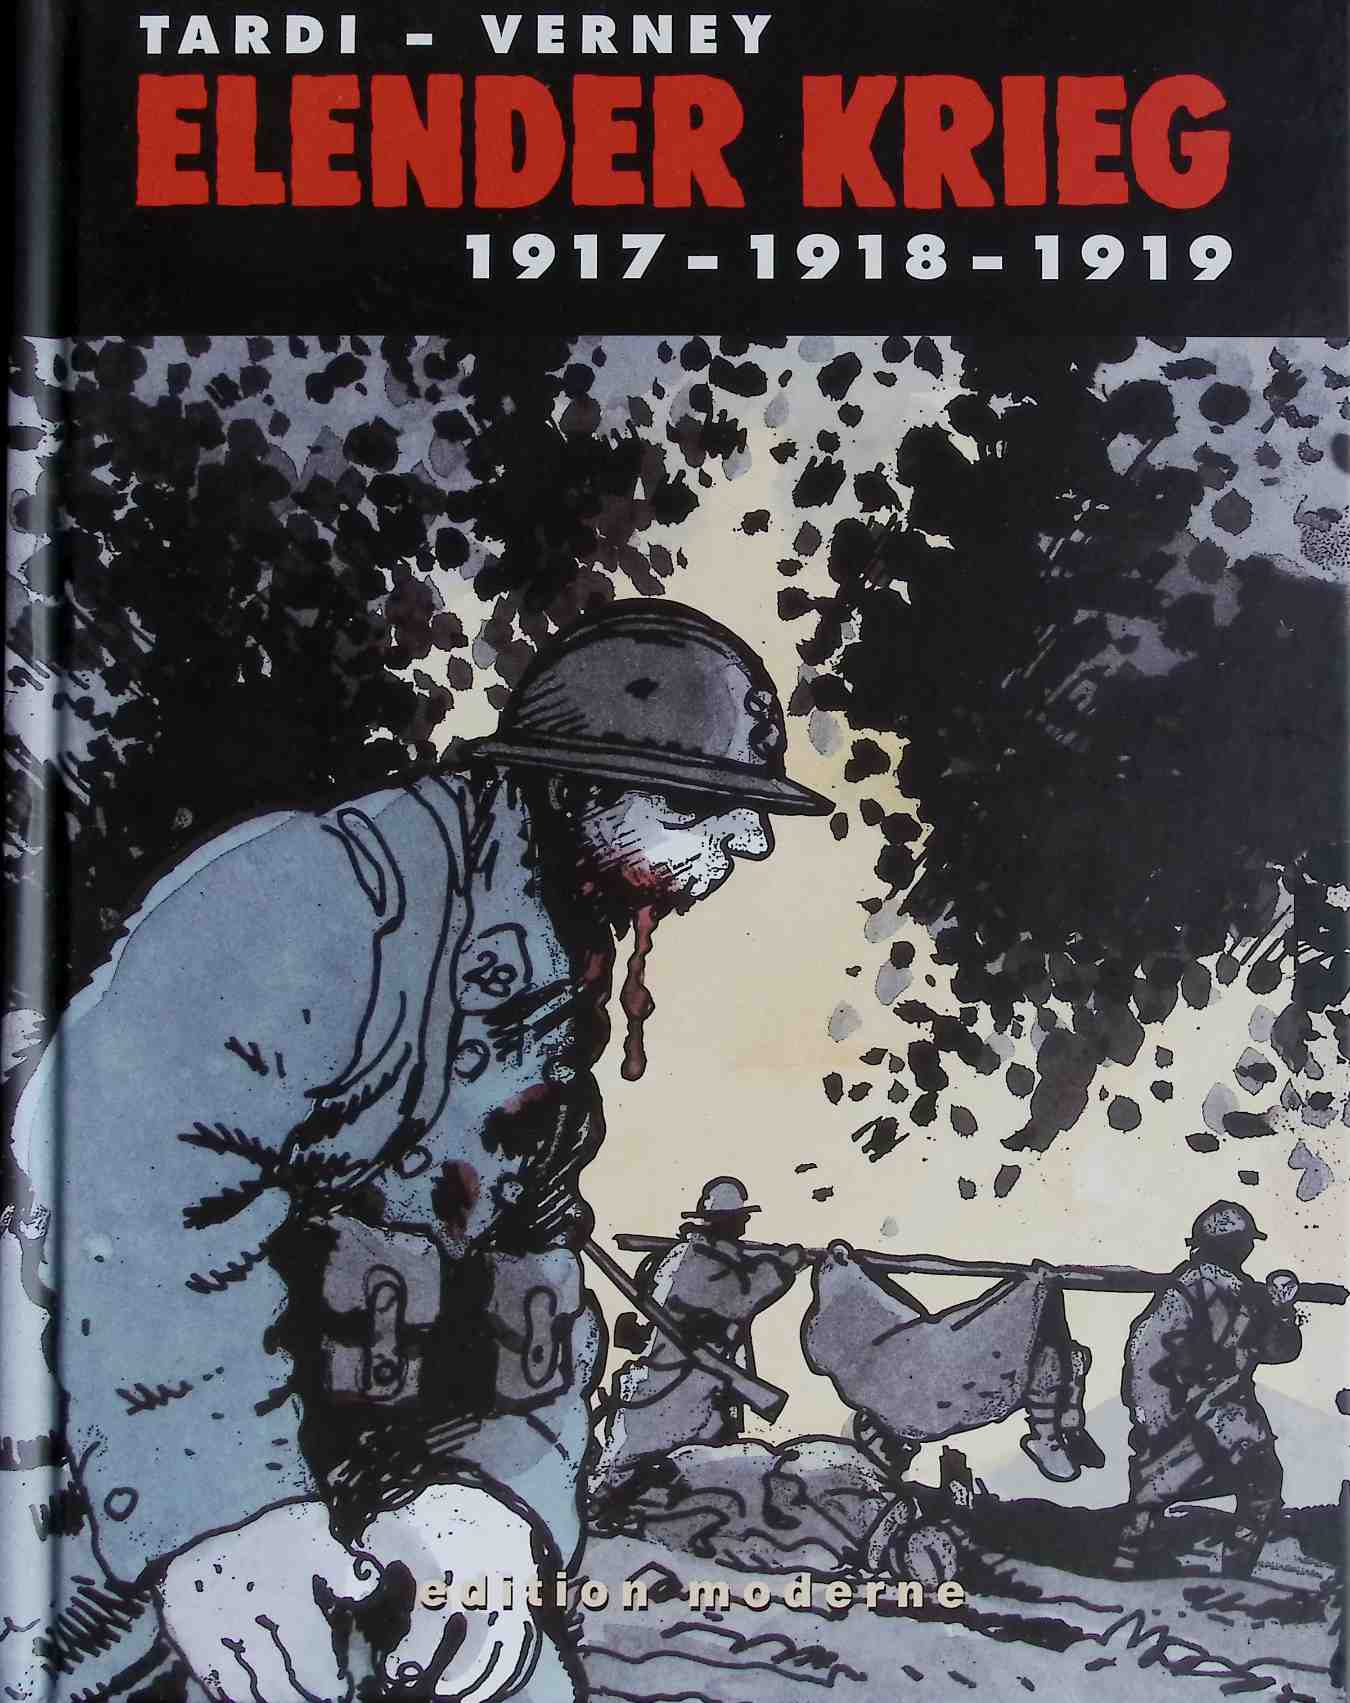 Elender Krieg, Bd. 2., 1917 - 1918 - 1919 - Tardi-Verney